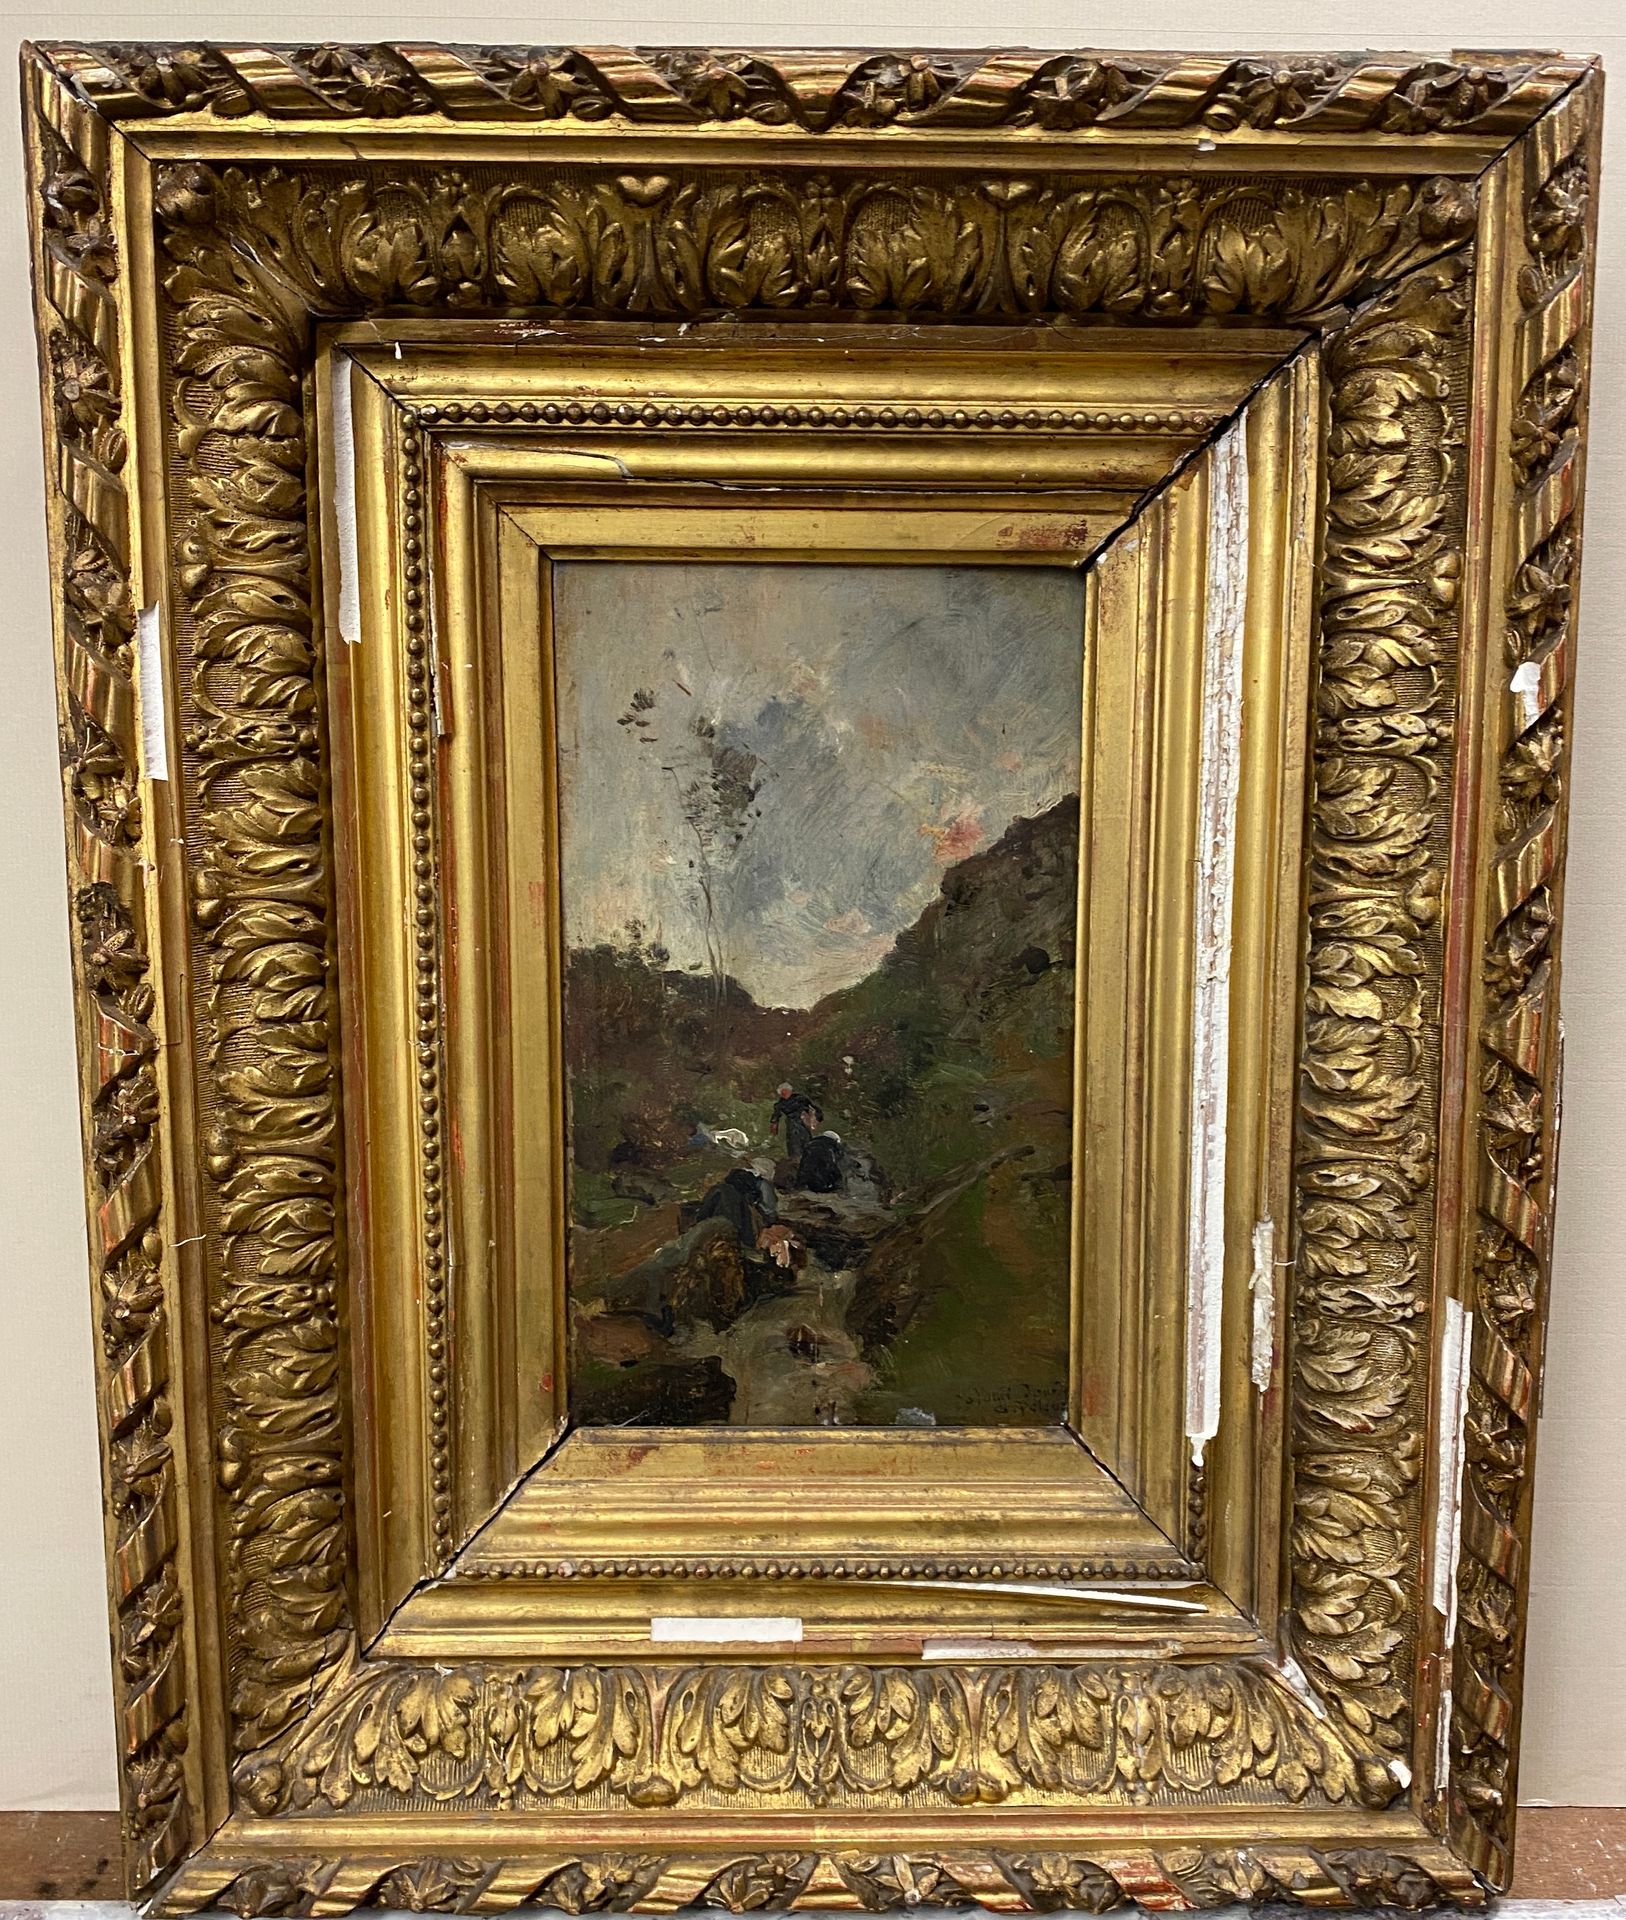 Null 莱昂-热尔曼-佩卢斯 (1838-1891)

女工

油画，右下角签名，献给朋友Jourdain。

尺寸：23,5 x 14 cm